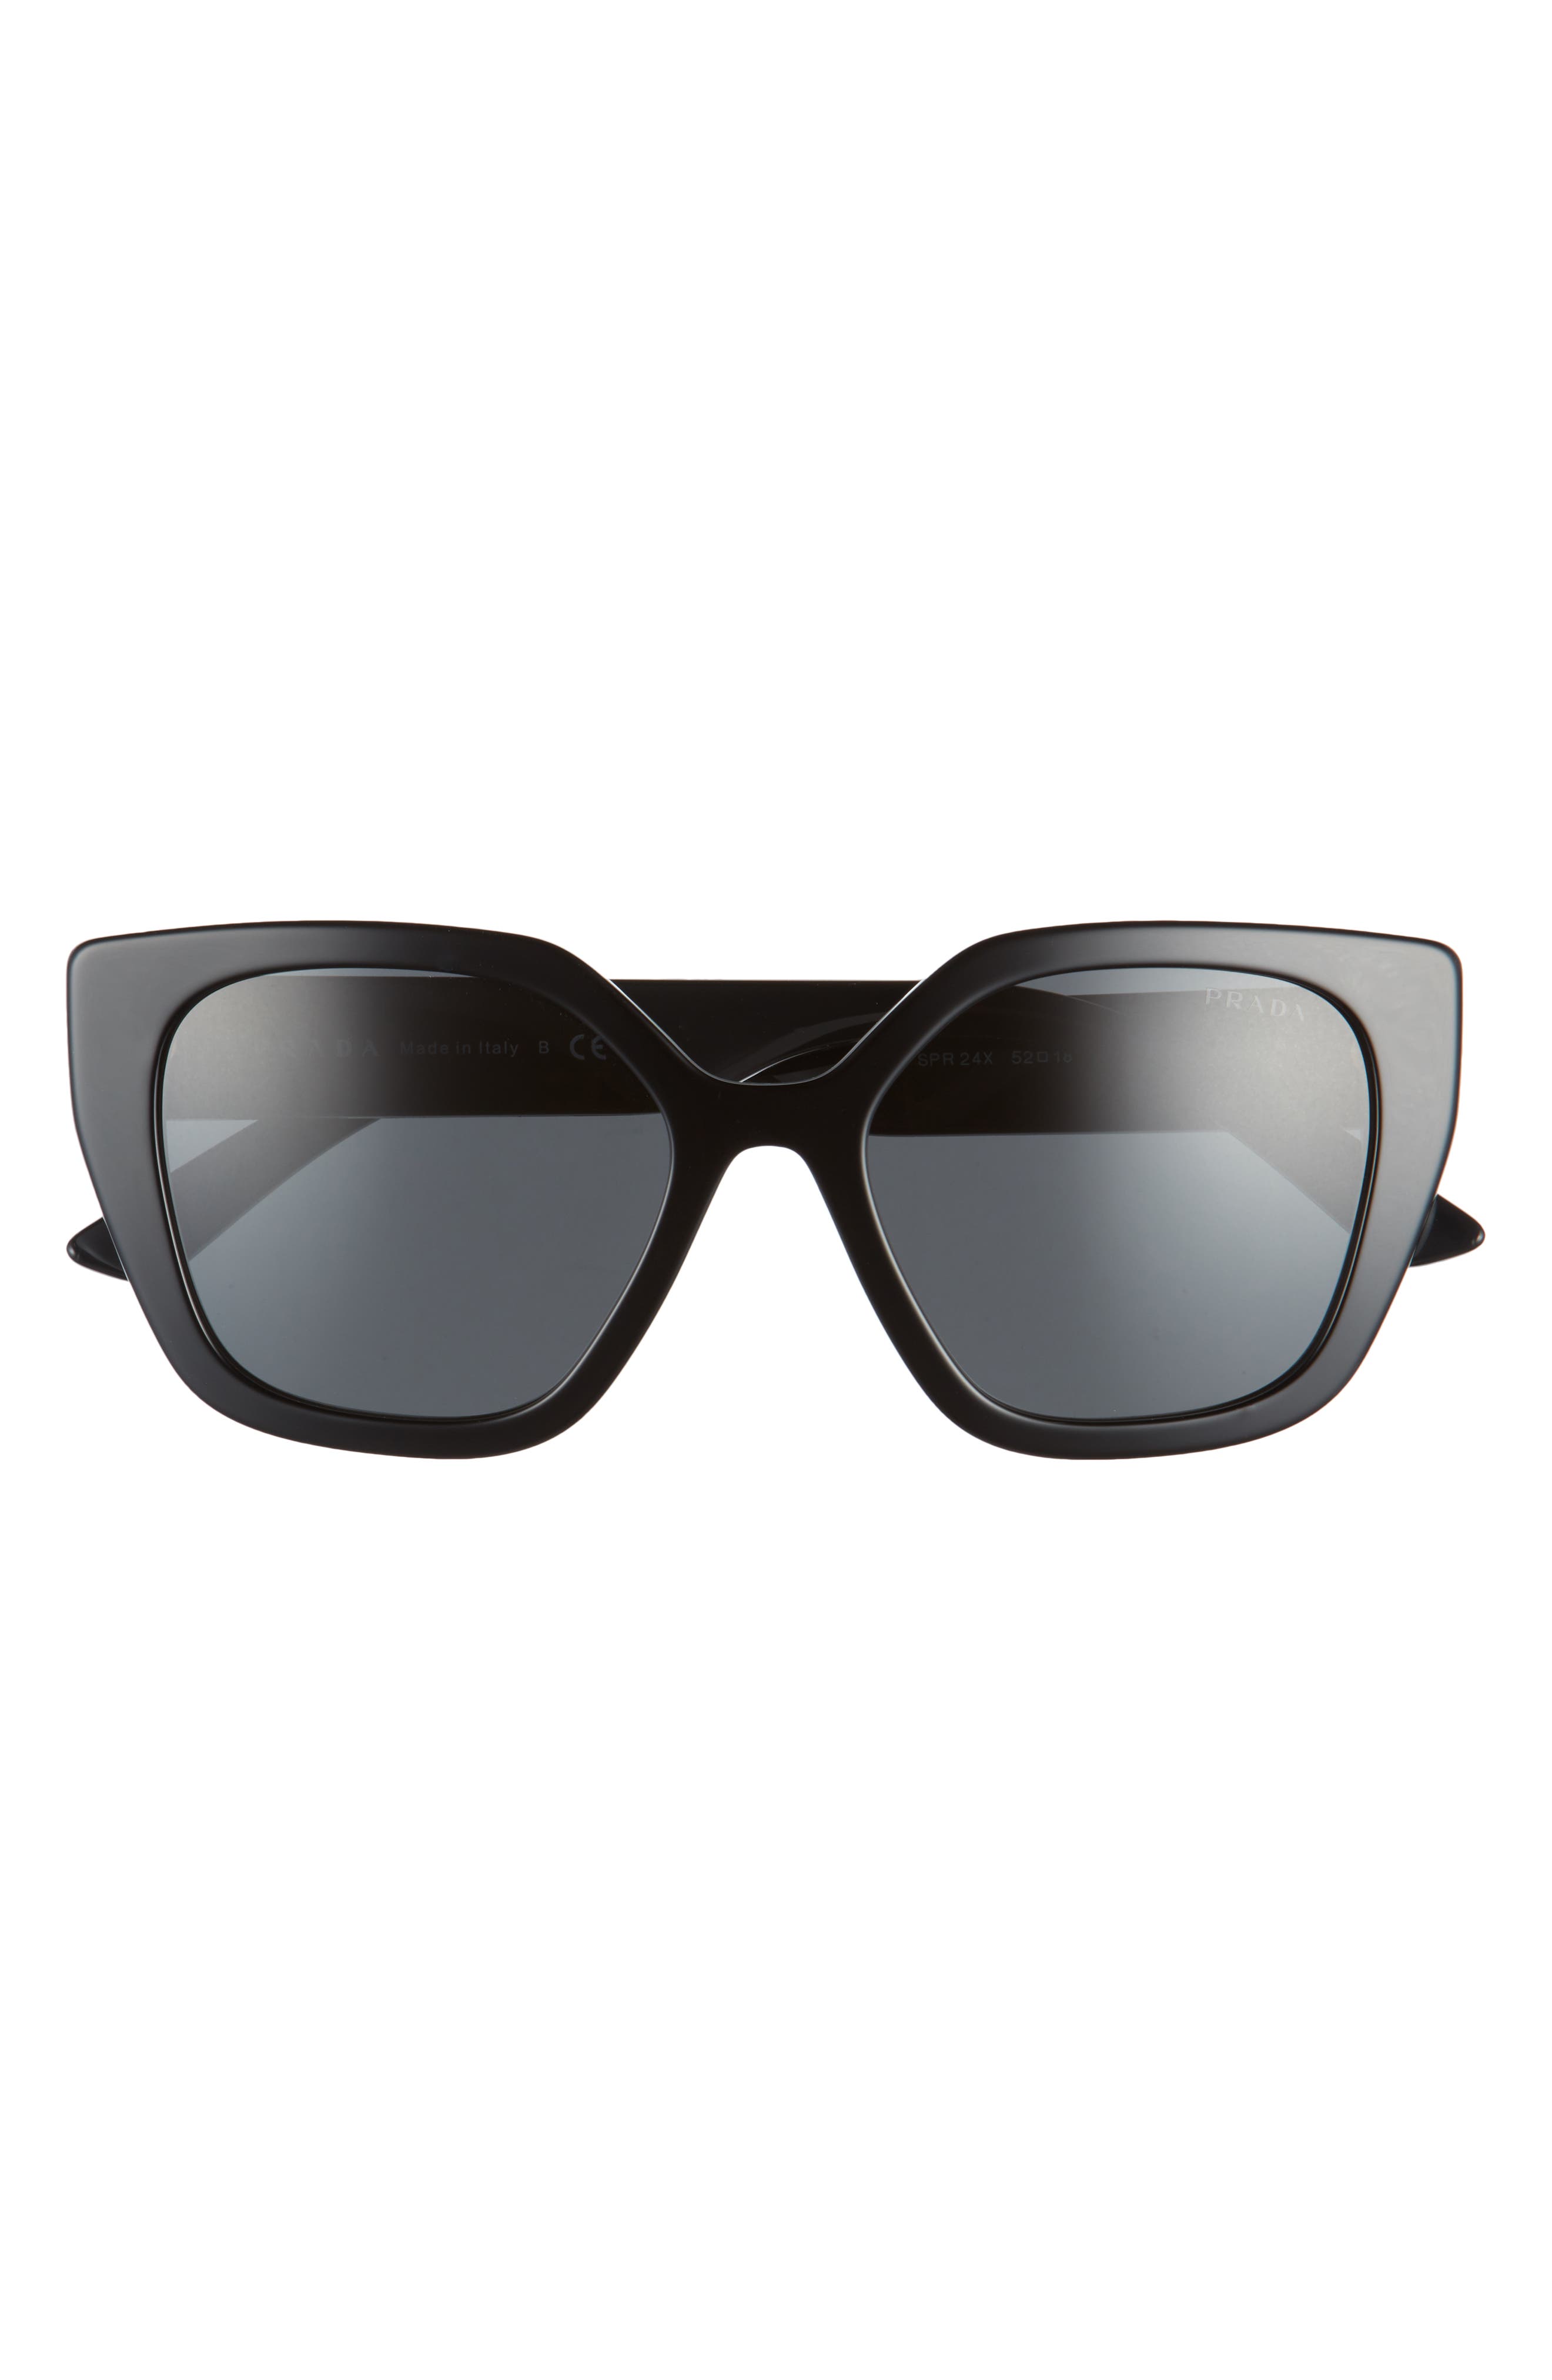 women's prada sunglasses for sale